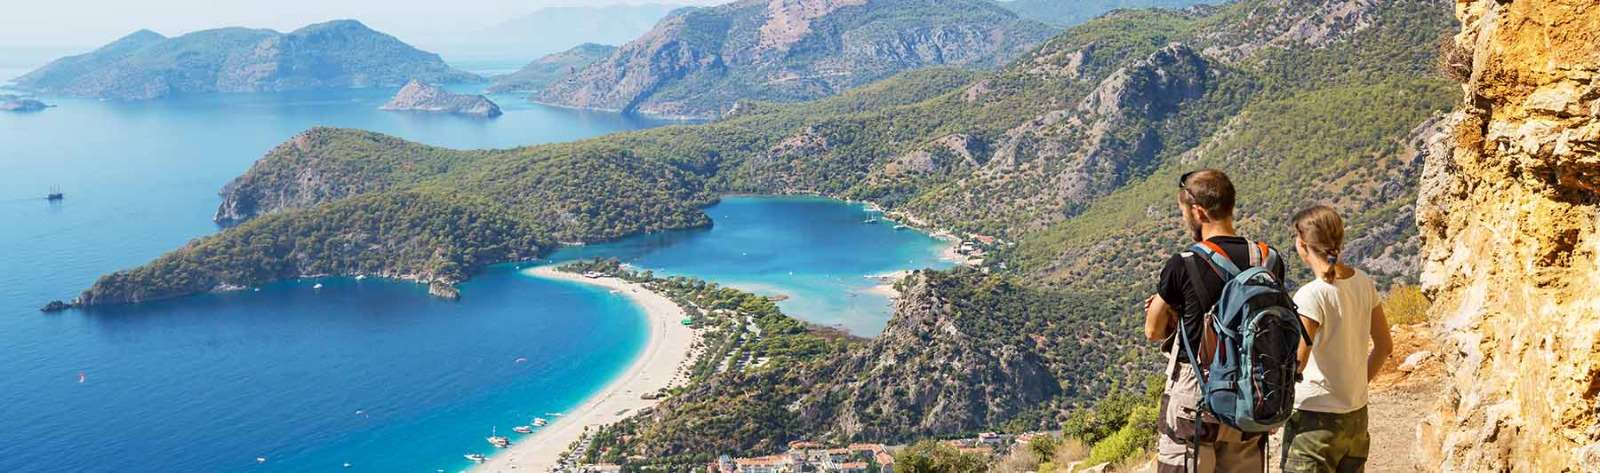 Discover the beautiful Lycian Coast